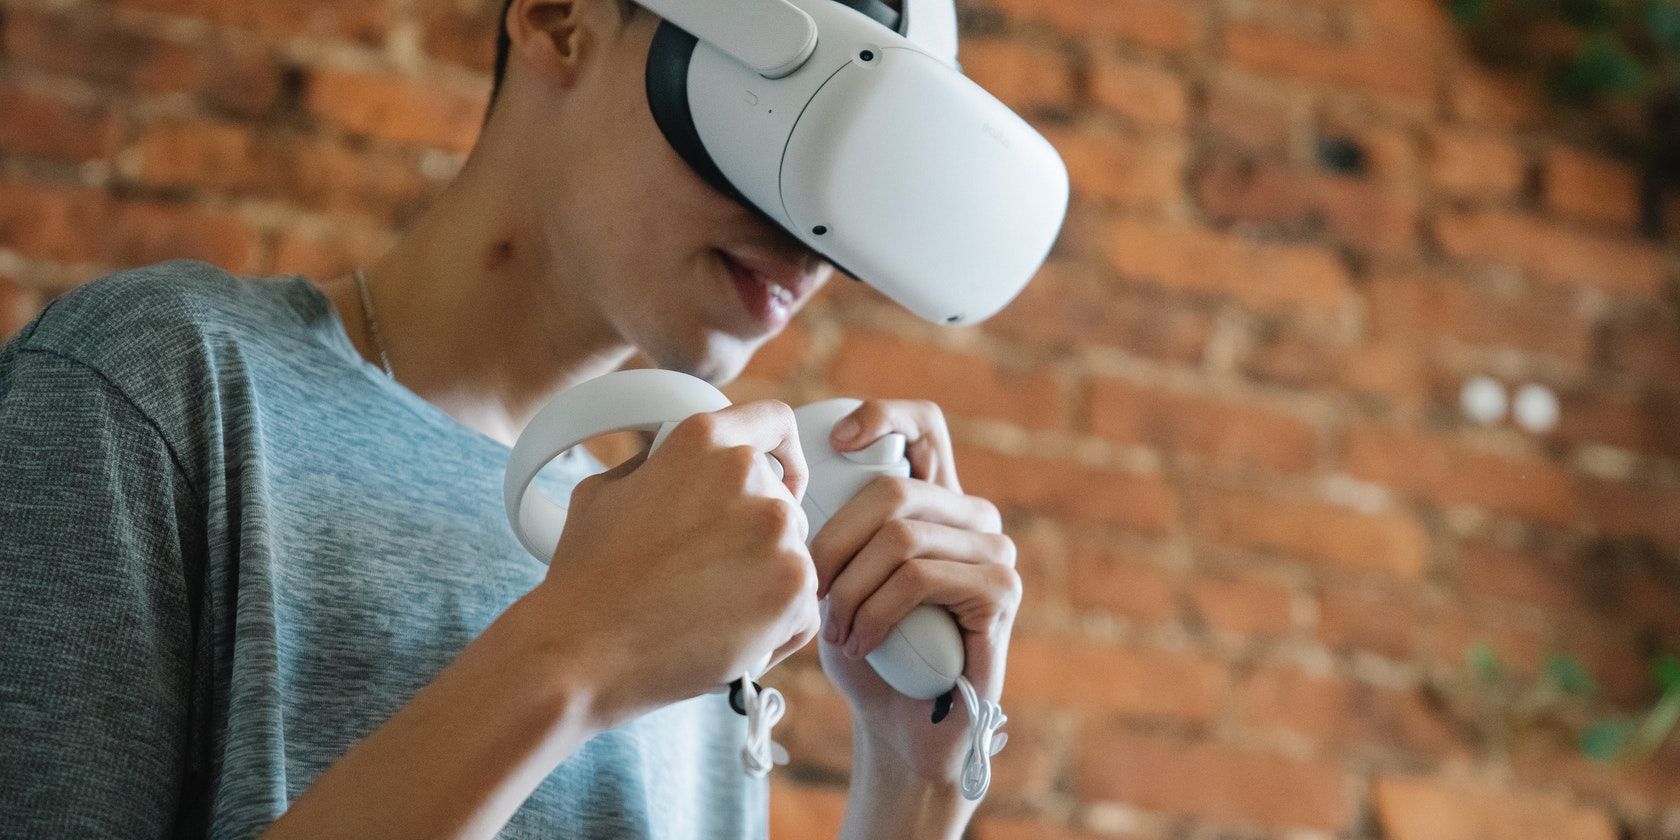 person wearing virtual reality headset